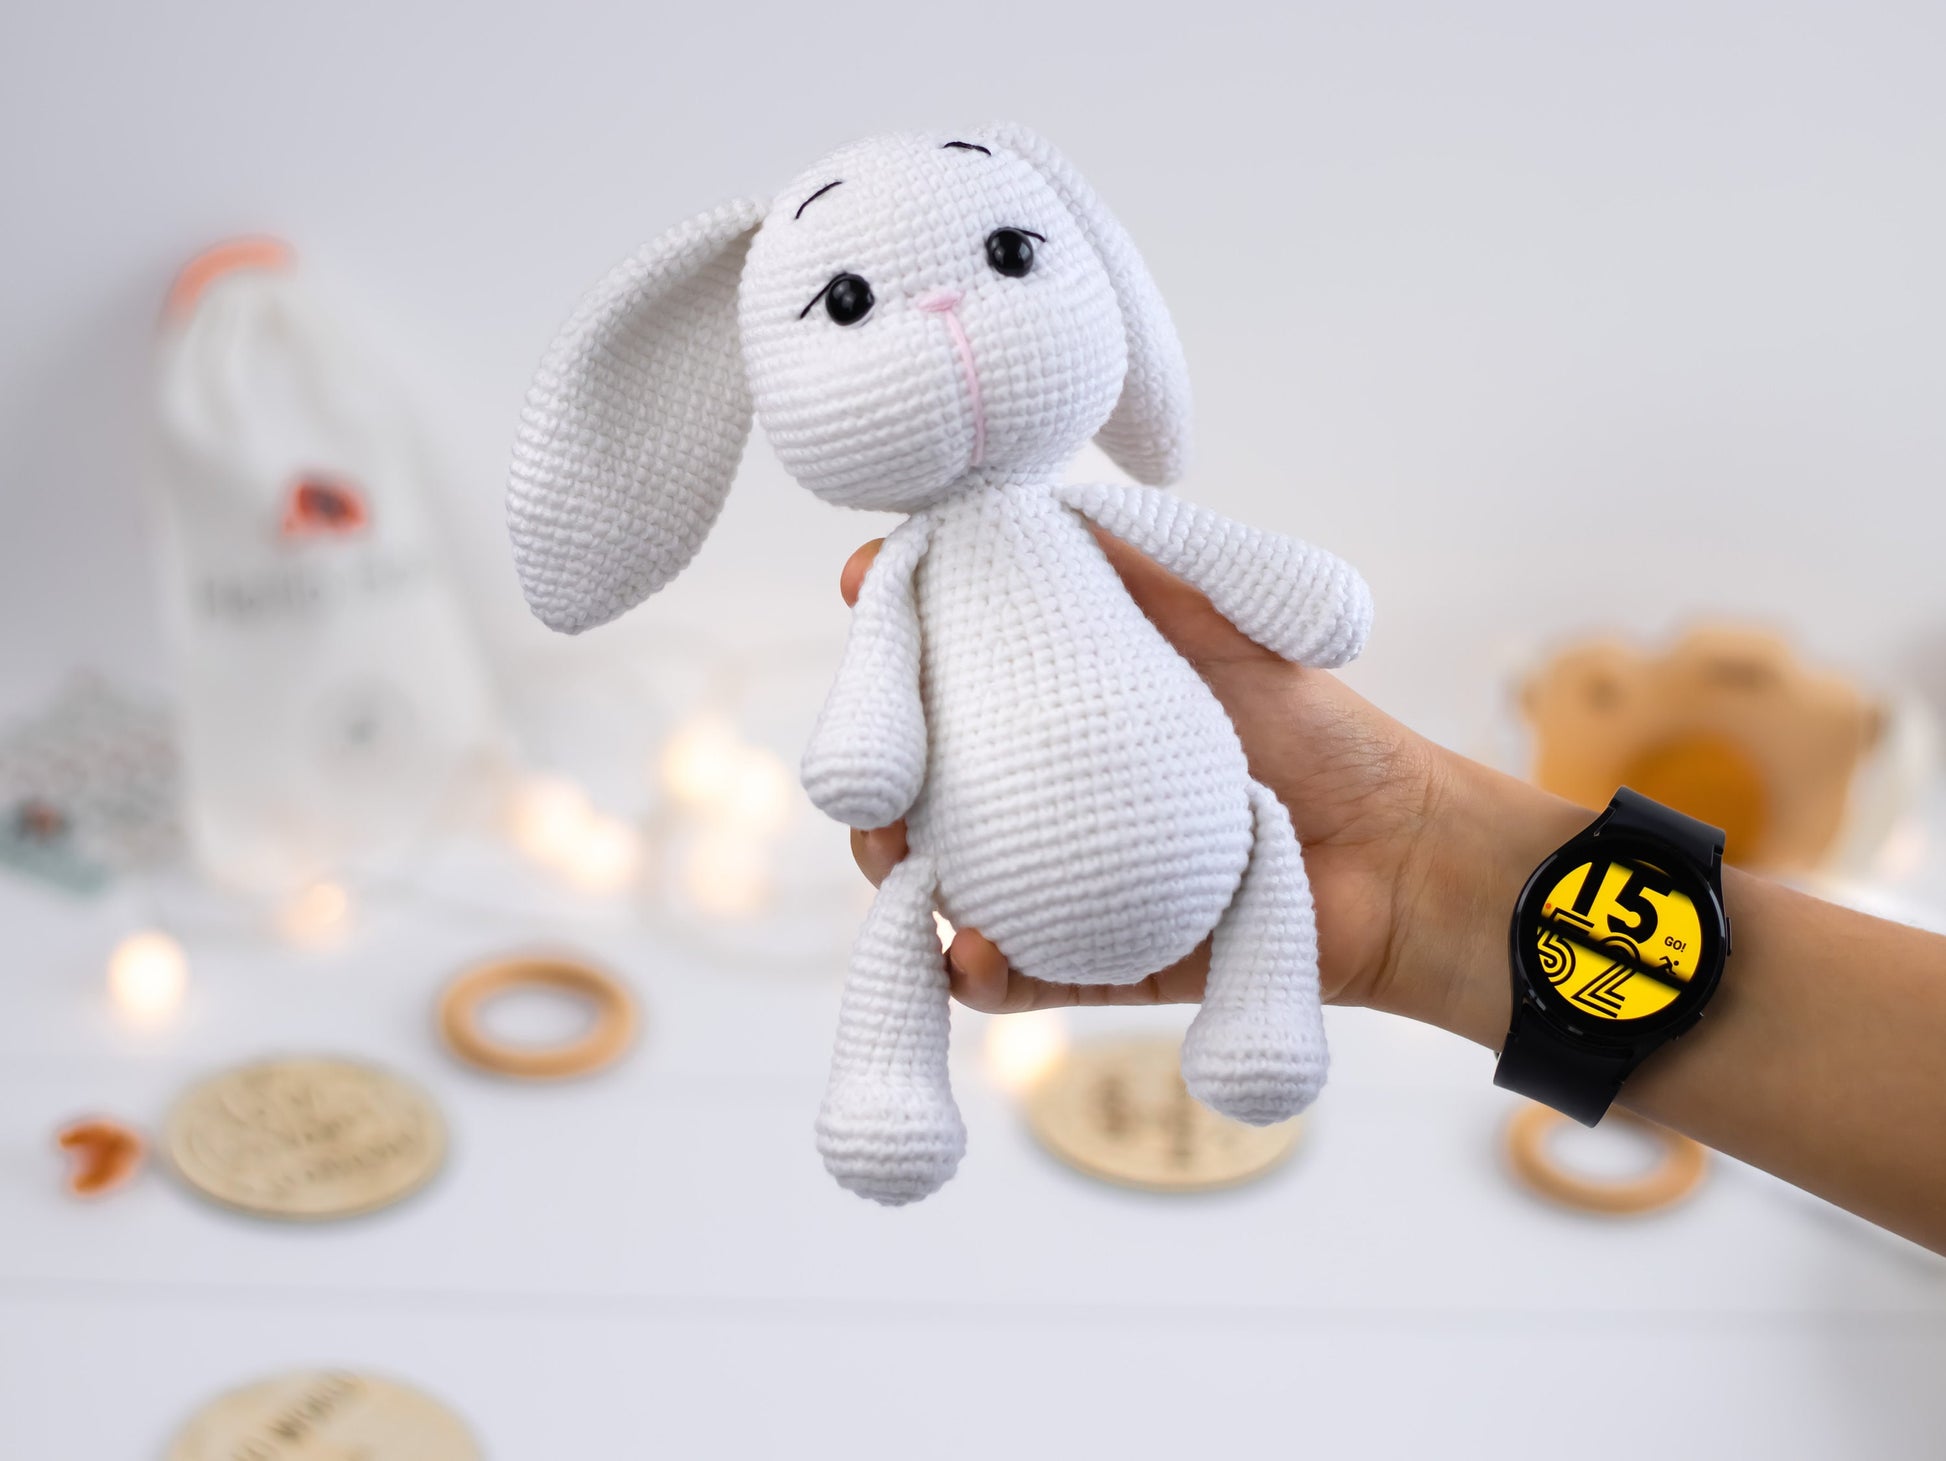 Crochet Bunny, Knitted Bunny, Amigurumi Bunny, Stuffed Bunny, Plush Bunny, Knit Bunny, Bunny Toy, Bunny Plush, Red Bunny, Baby Shower Gift